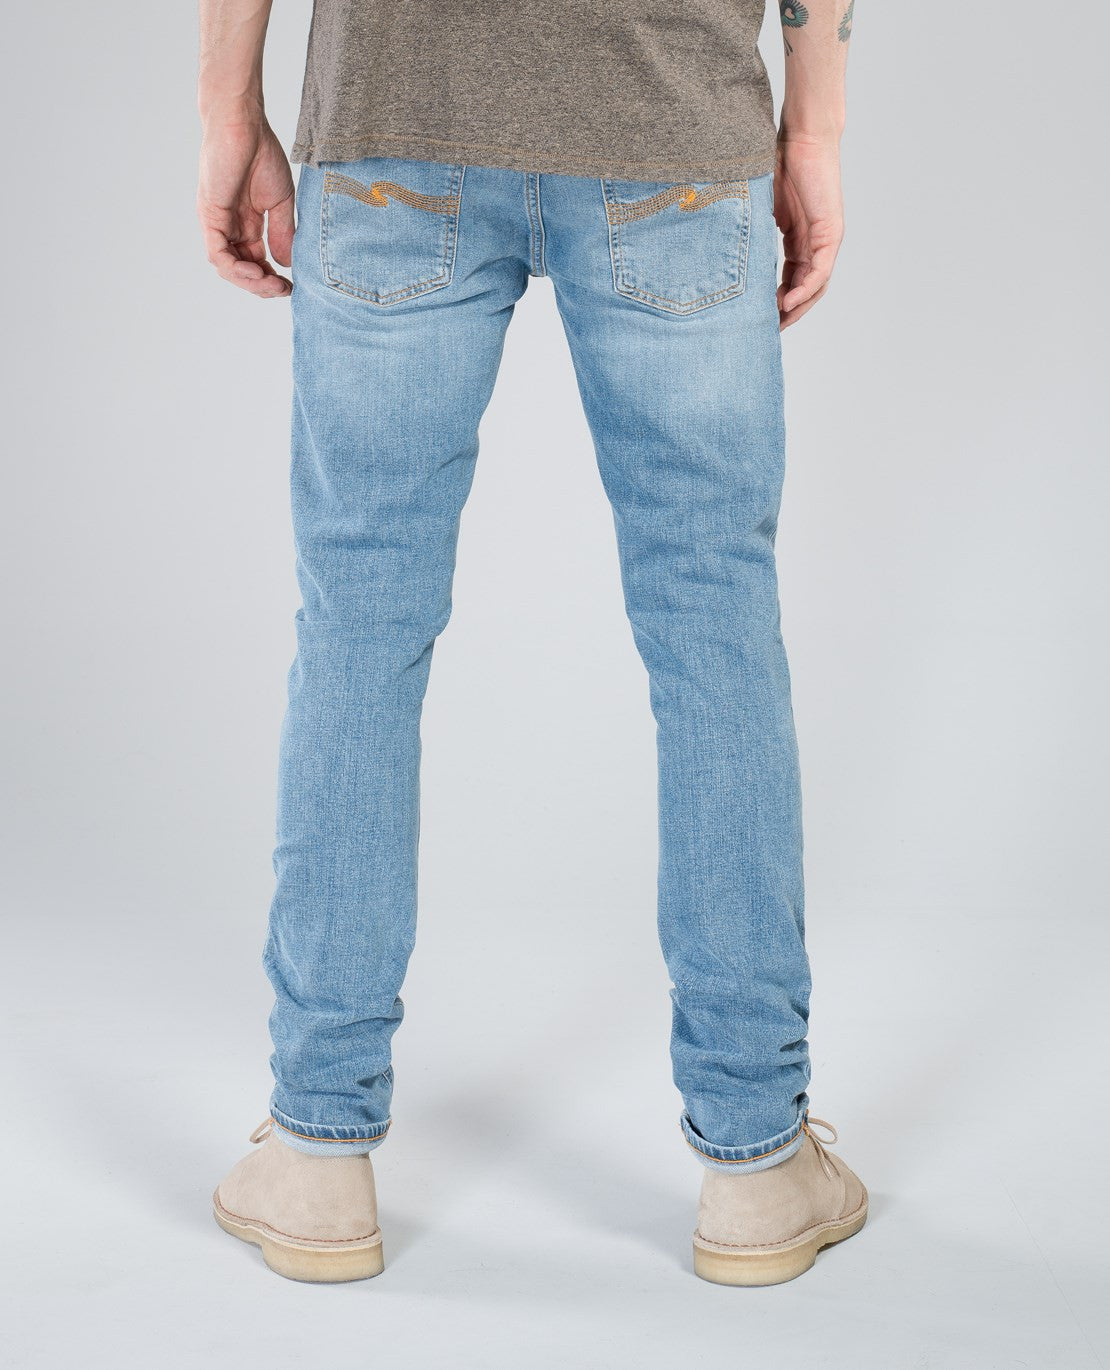 Nudie Jeans Tight Long John Saltwater Indigo - Supply Co